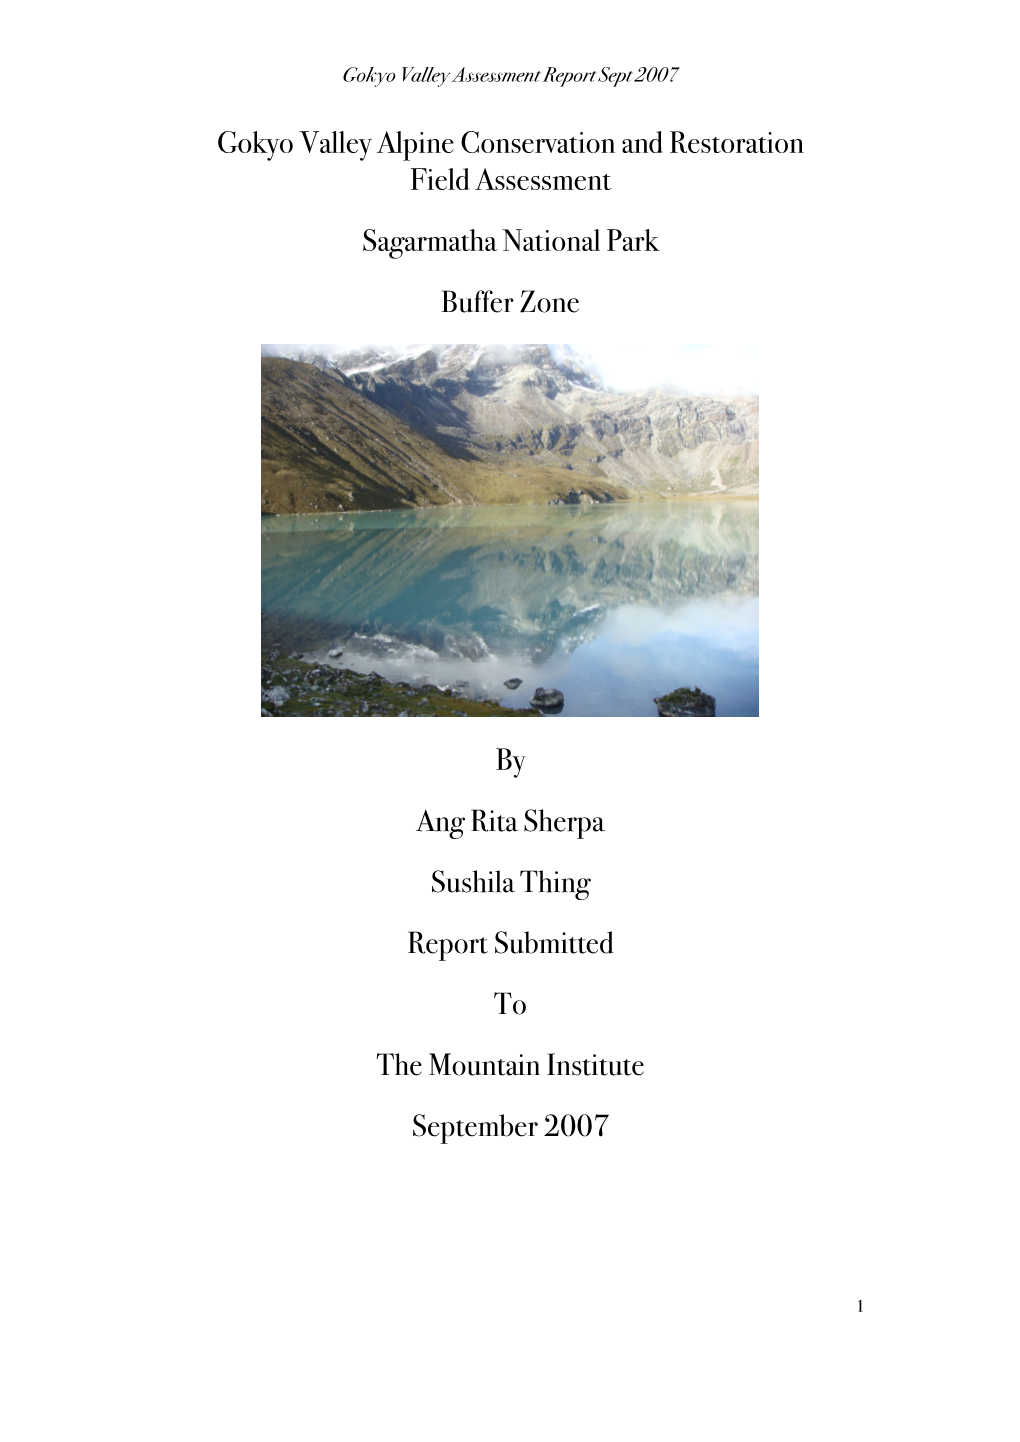 Gokyo Valley Alpine Conservation and Restoration Field Assessment Sagarmatha National Park Buffer Zone